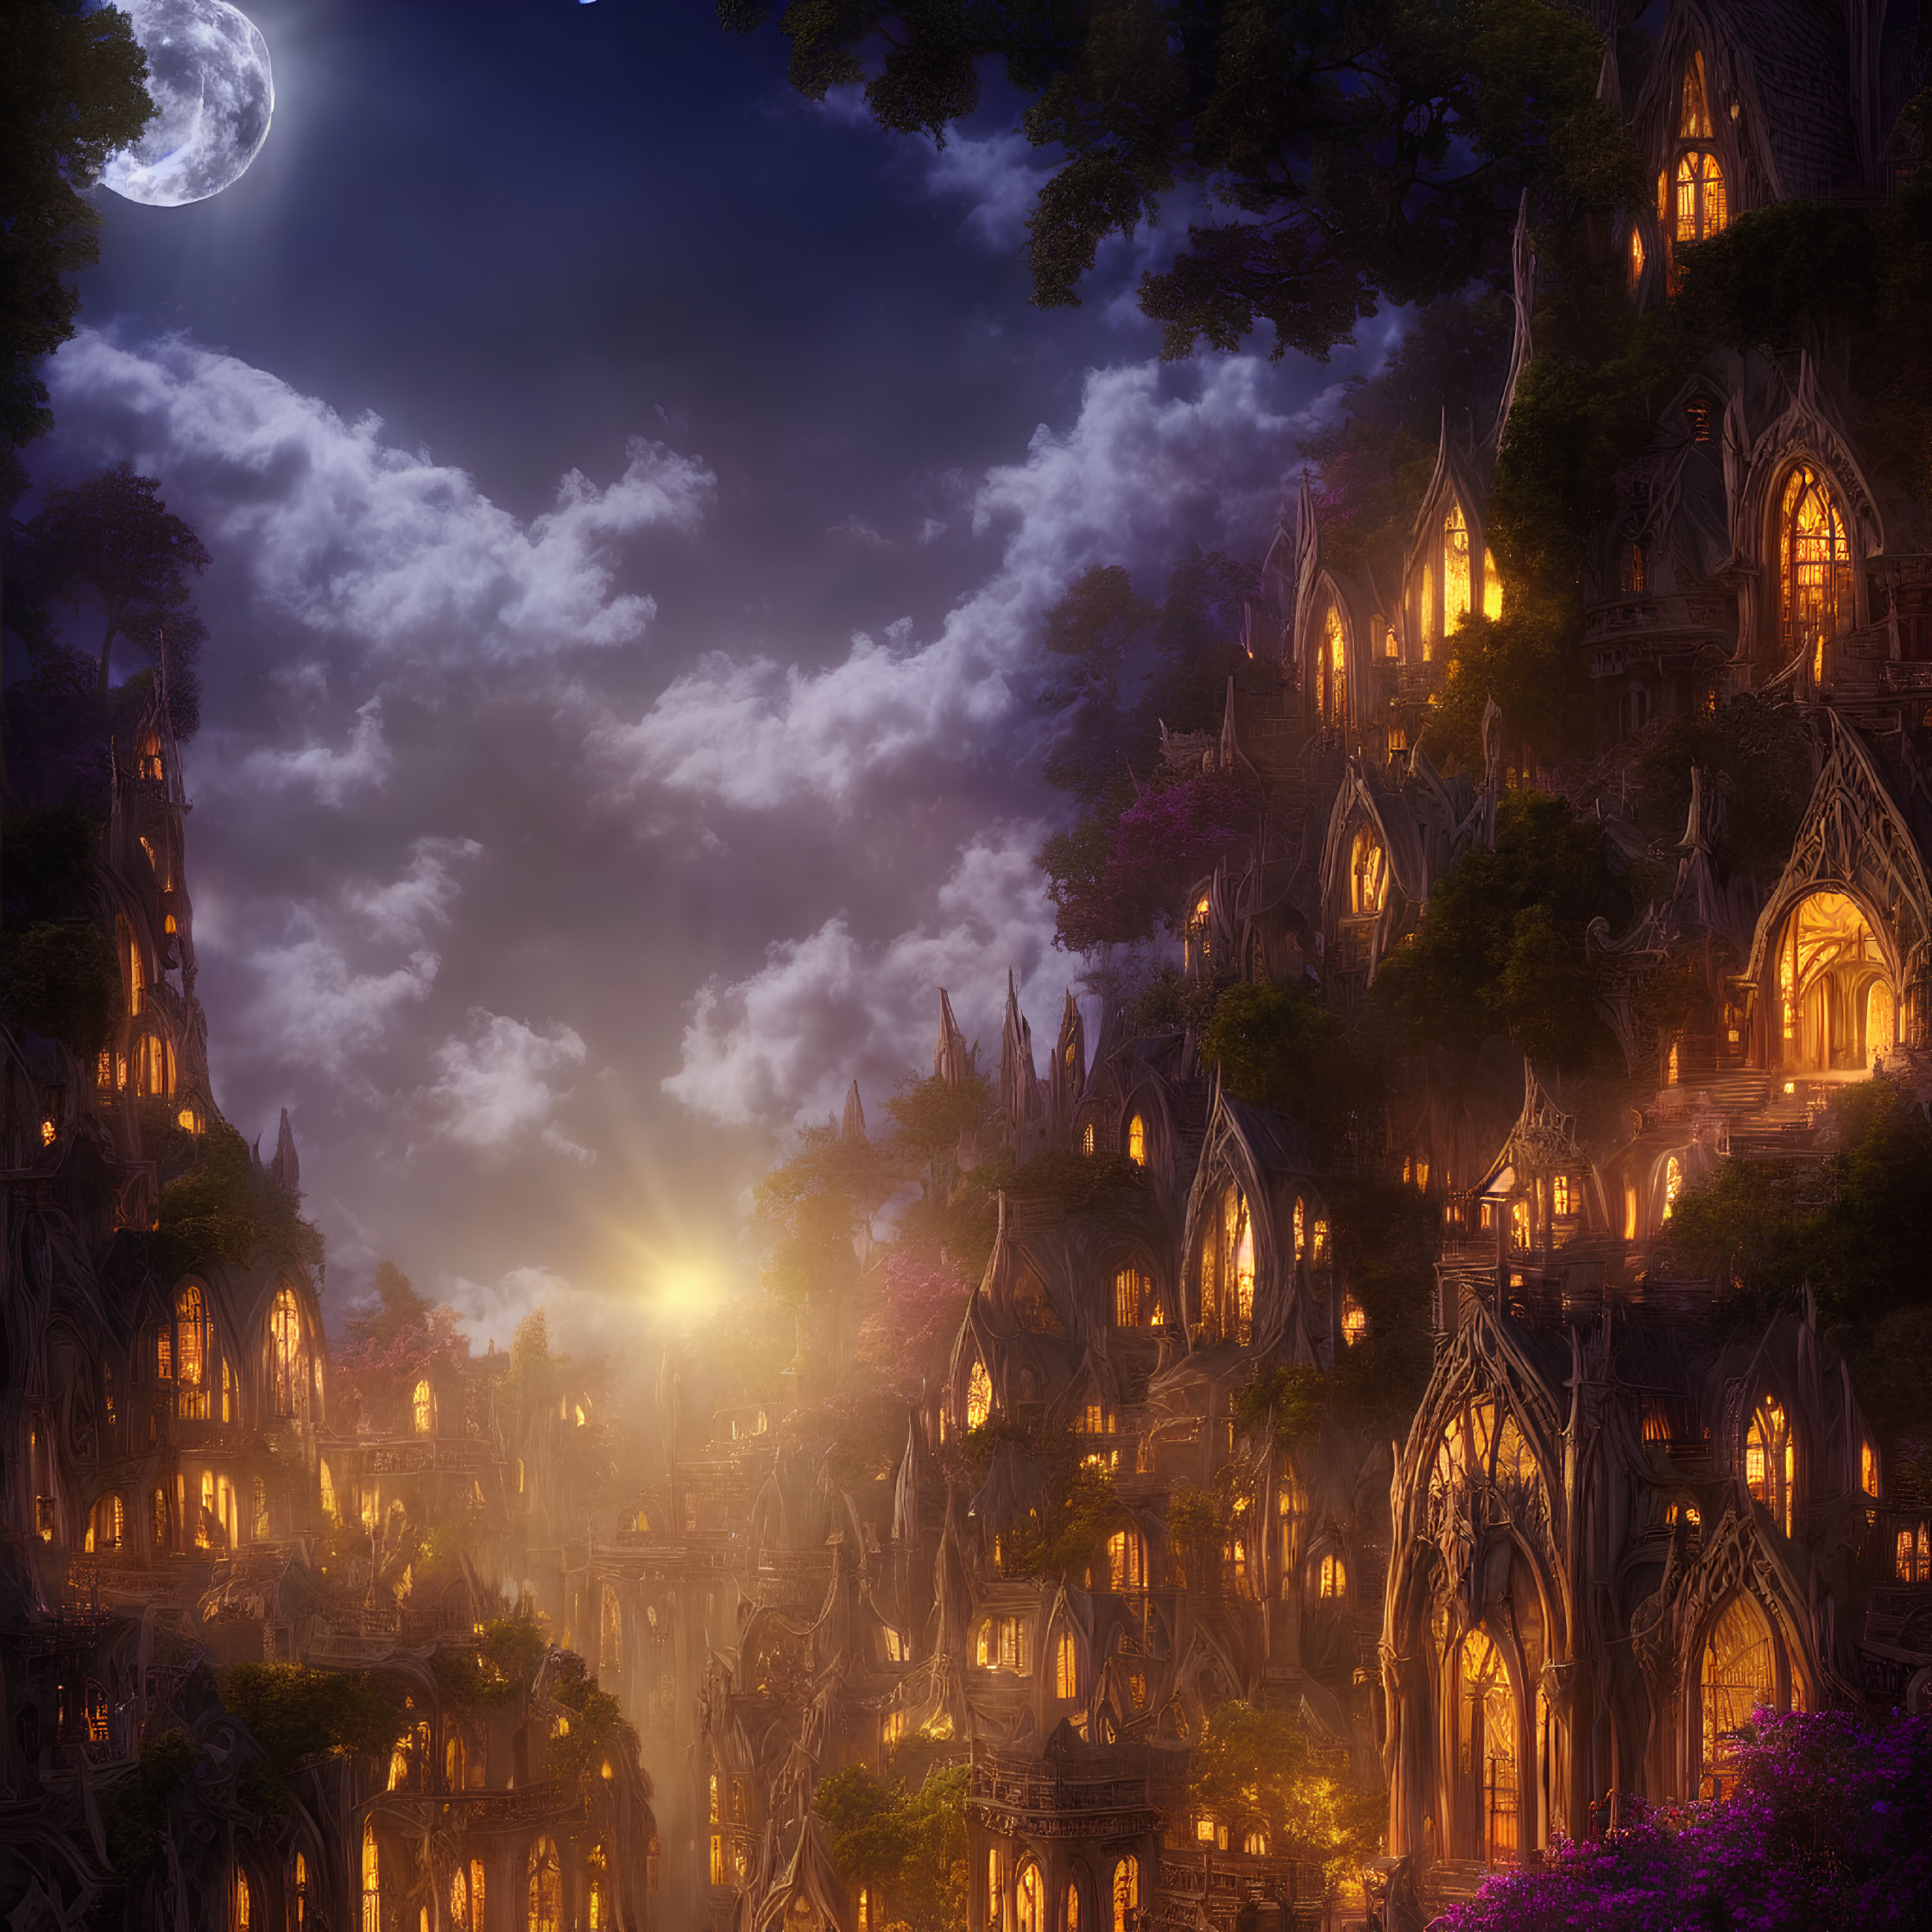 Gothic buildings illuminated under starry night sky